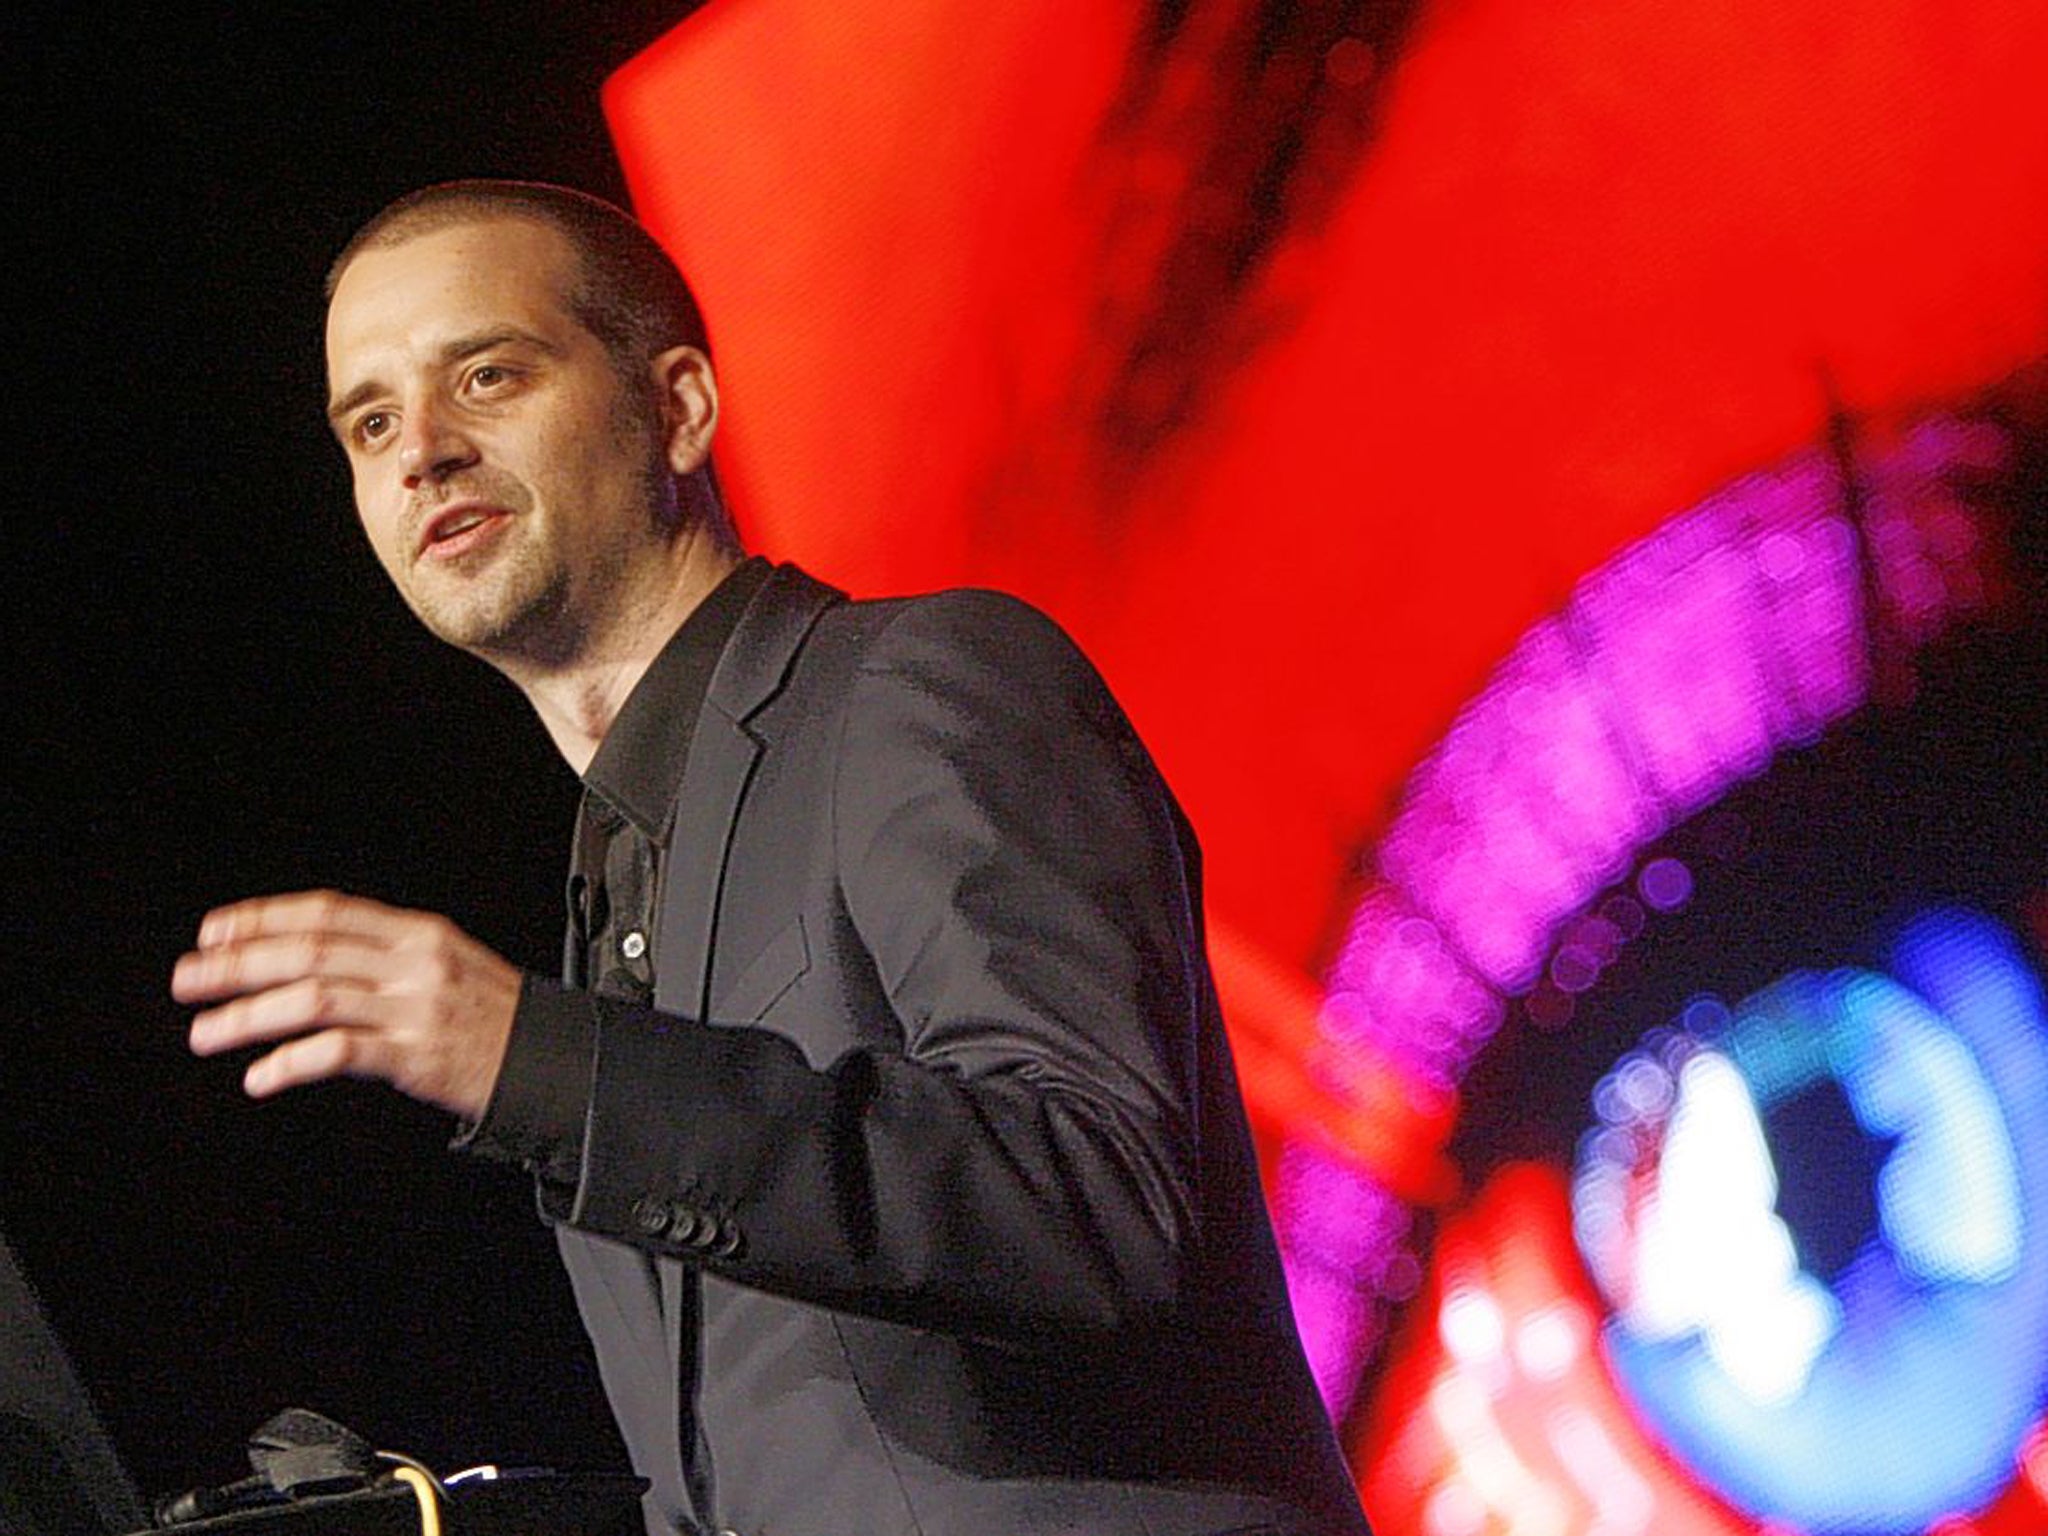 Tech guru: Jack addresses the Black Hat technology conference in Las Vegas in 2010